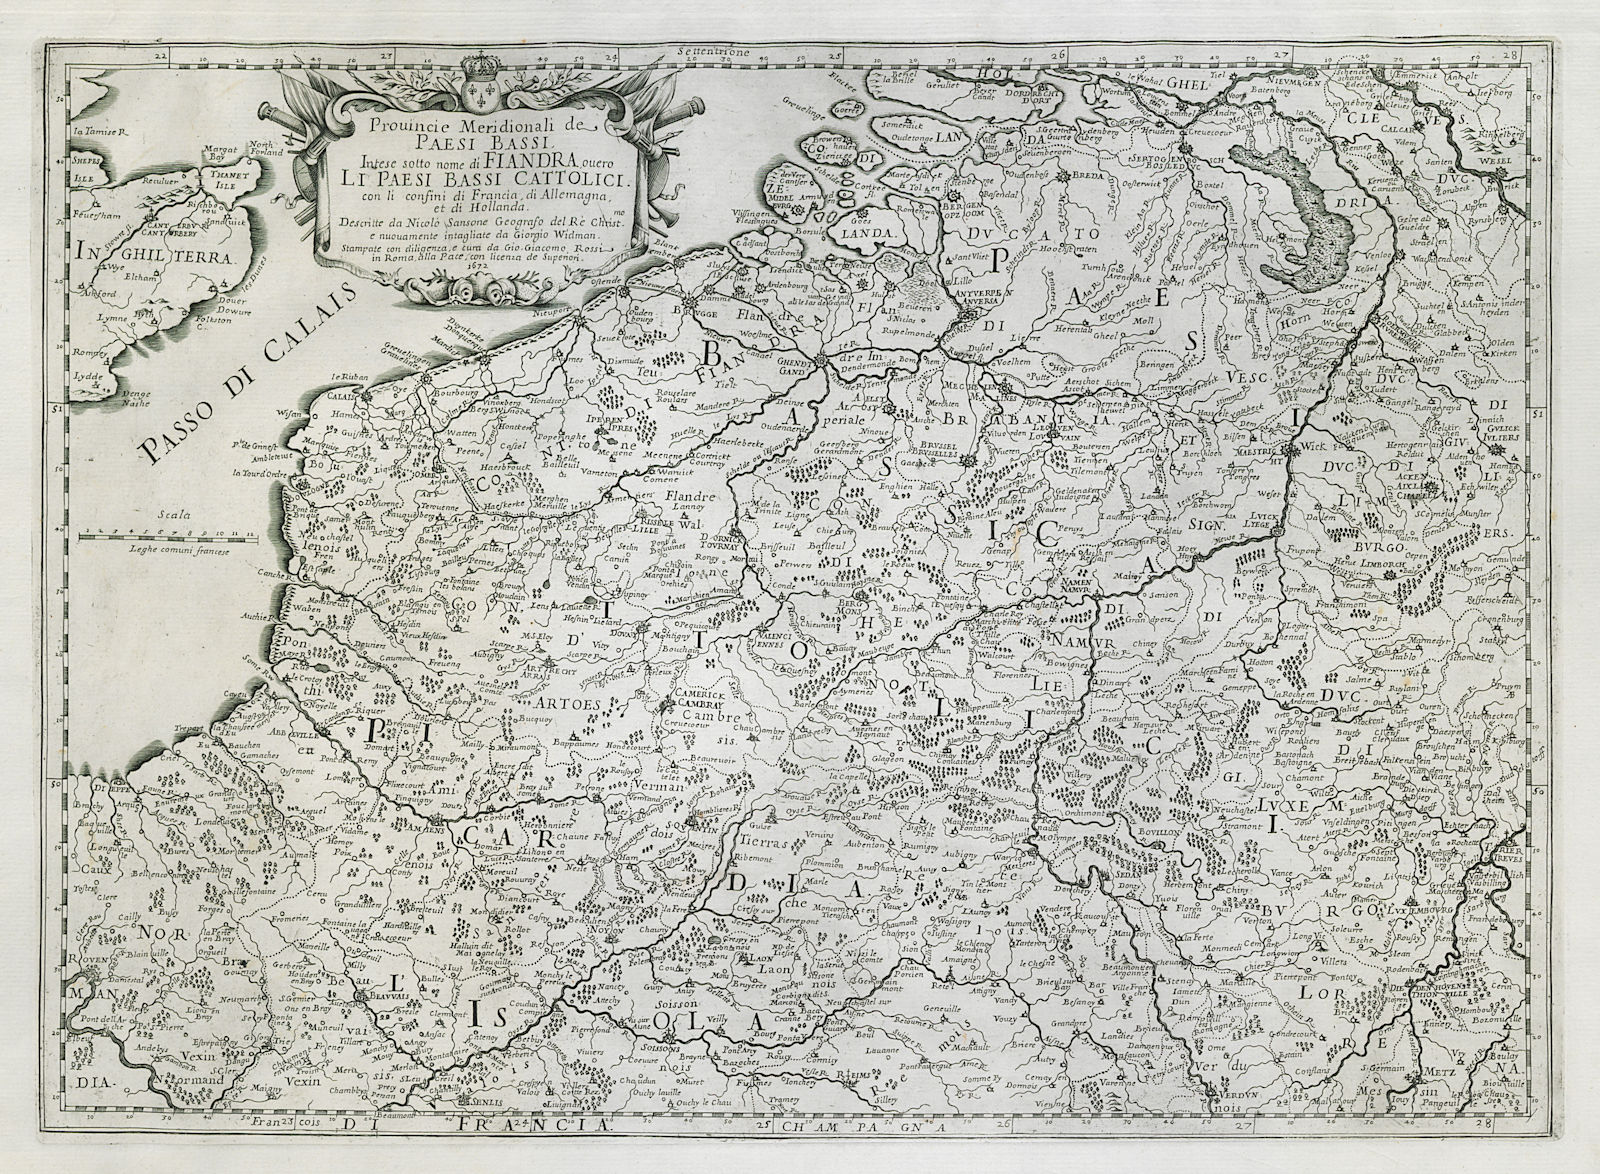 Associate Product Provincie Meridionali de Paesi Bassi. Belgium & Picardy. ROSSI/SANSON 1672 map